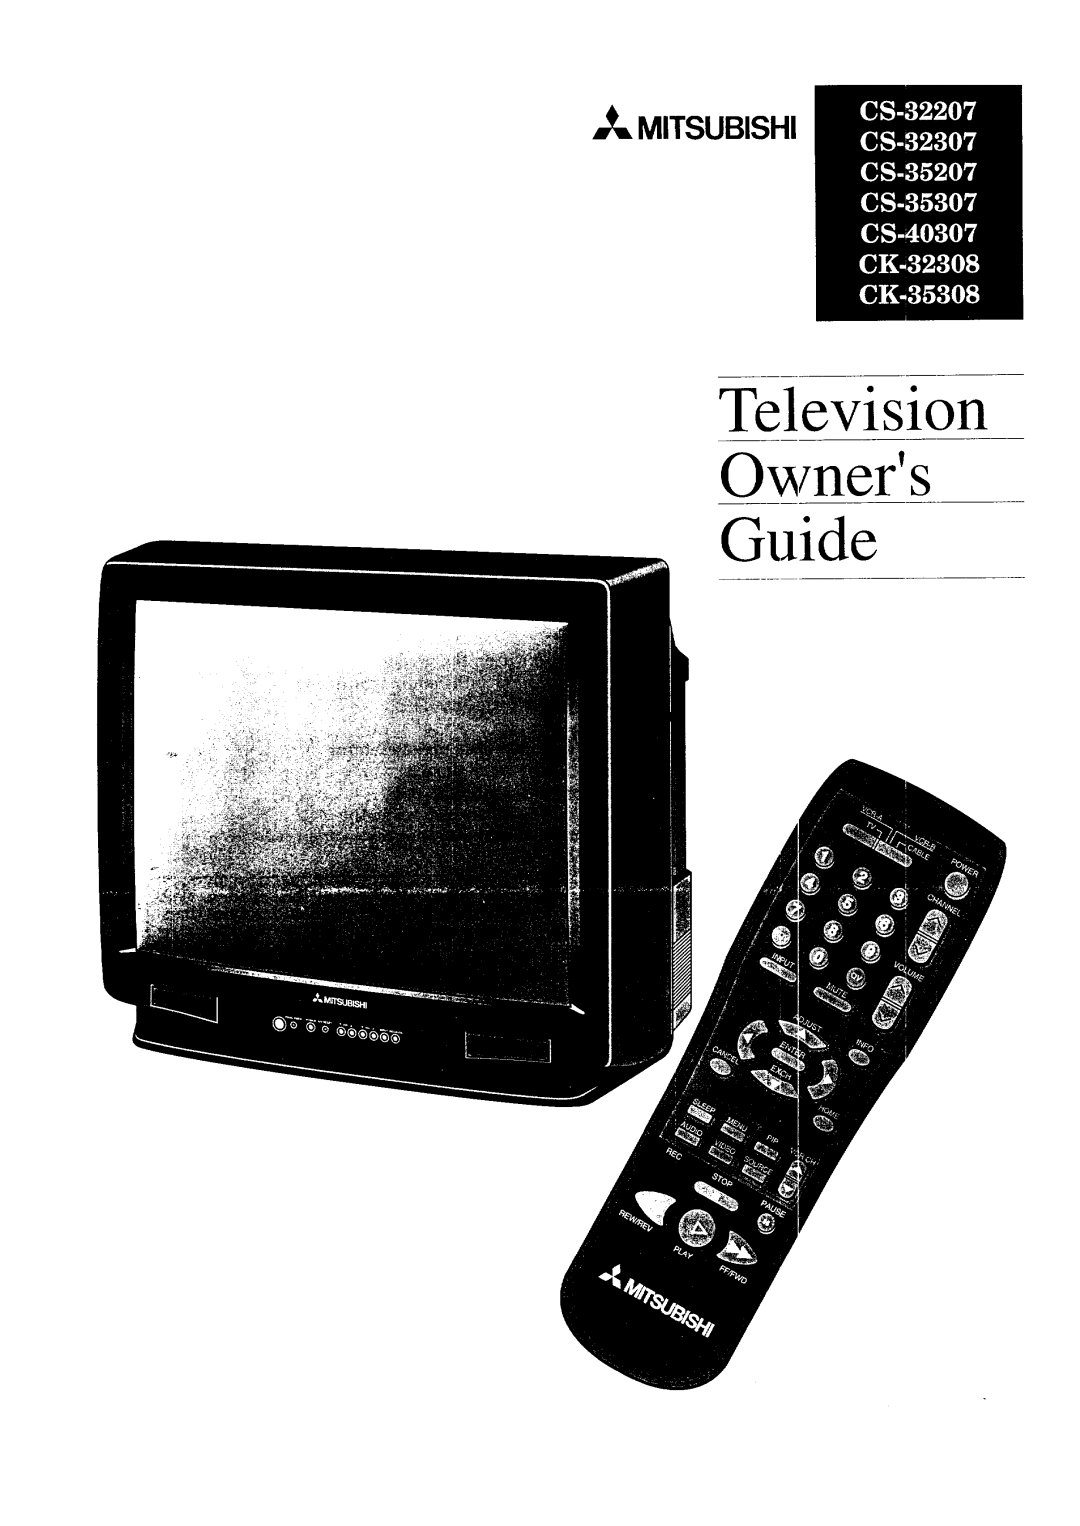 Mitsubishi Electronics CK-32307, CK-35308, CS-35207, CS-40307 manual Owners Guide, Television, =, Mitsubishi 